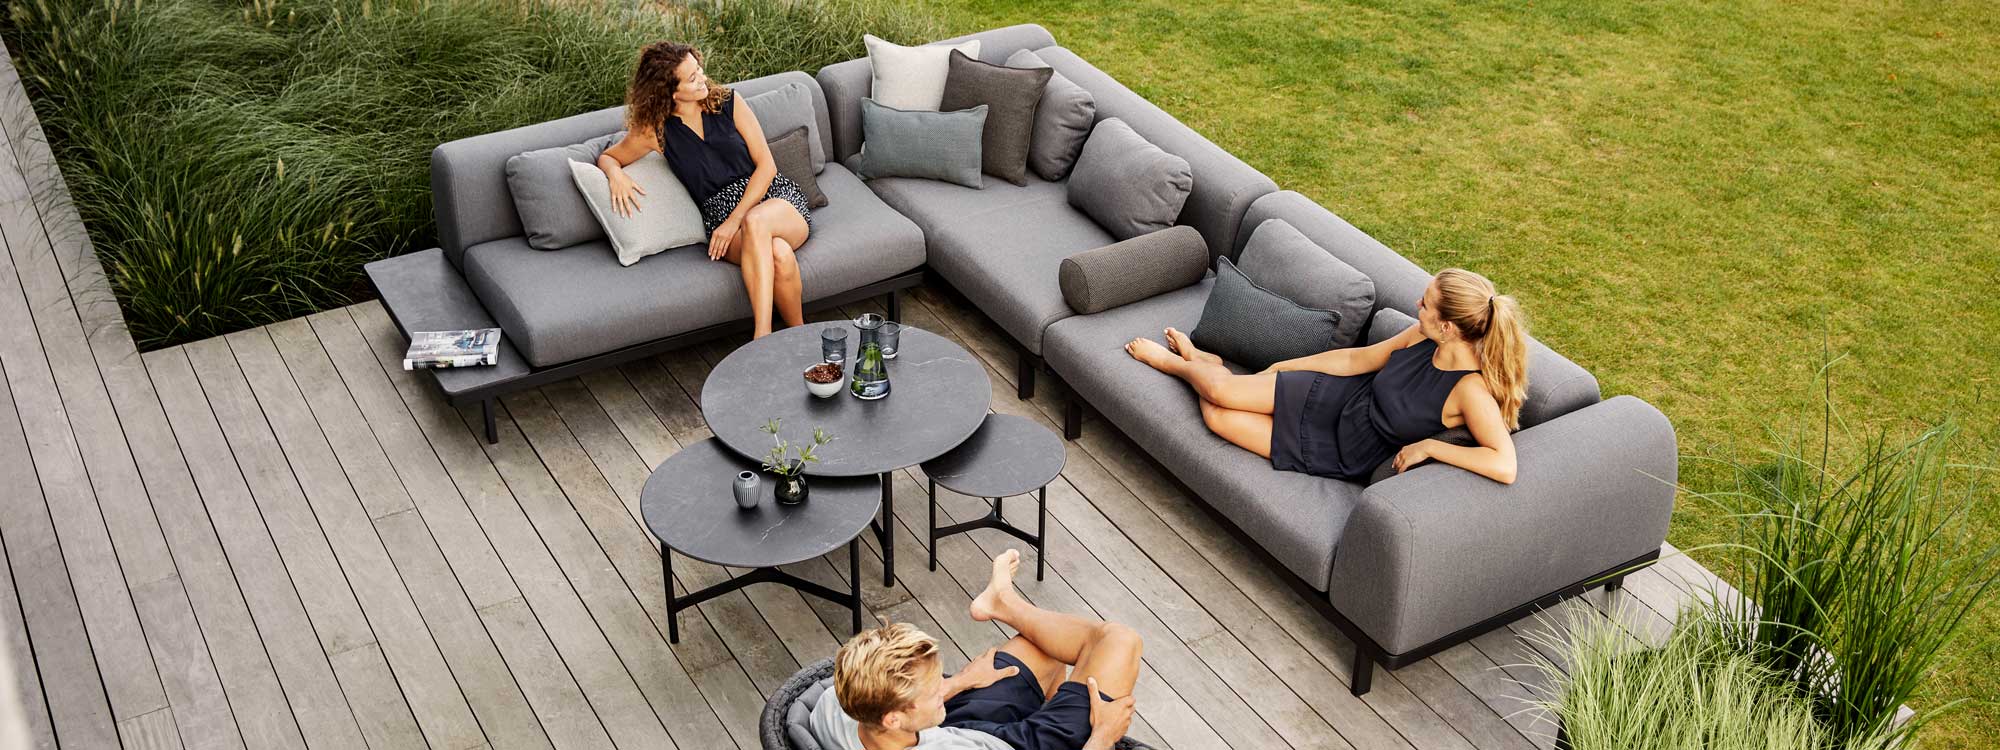 Space modern garden corner sofa is a luxury modular outdoor sofa in all-weather garden sofa materials by Cane-line garden furniture company